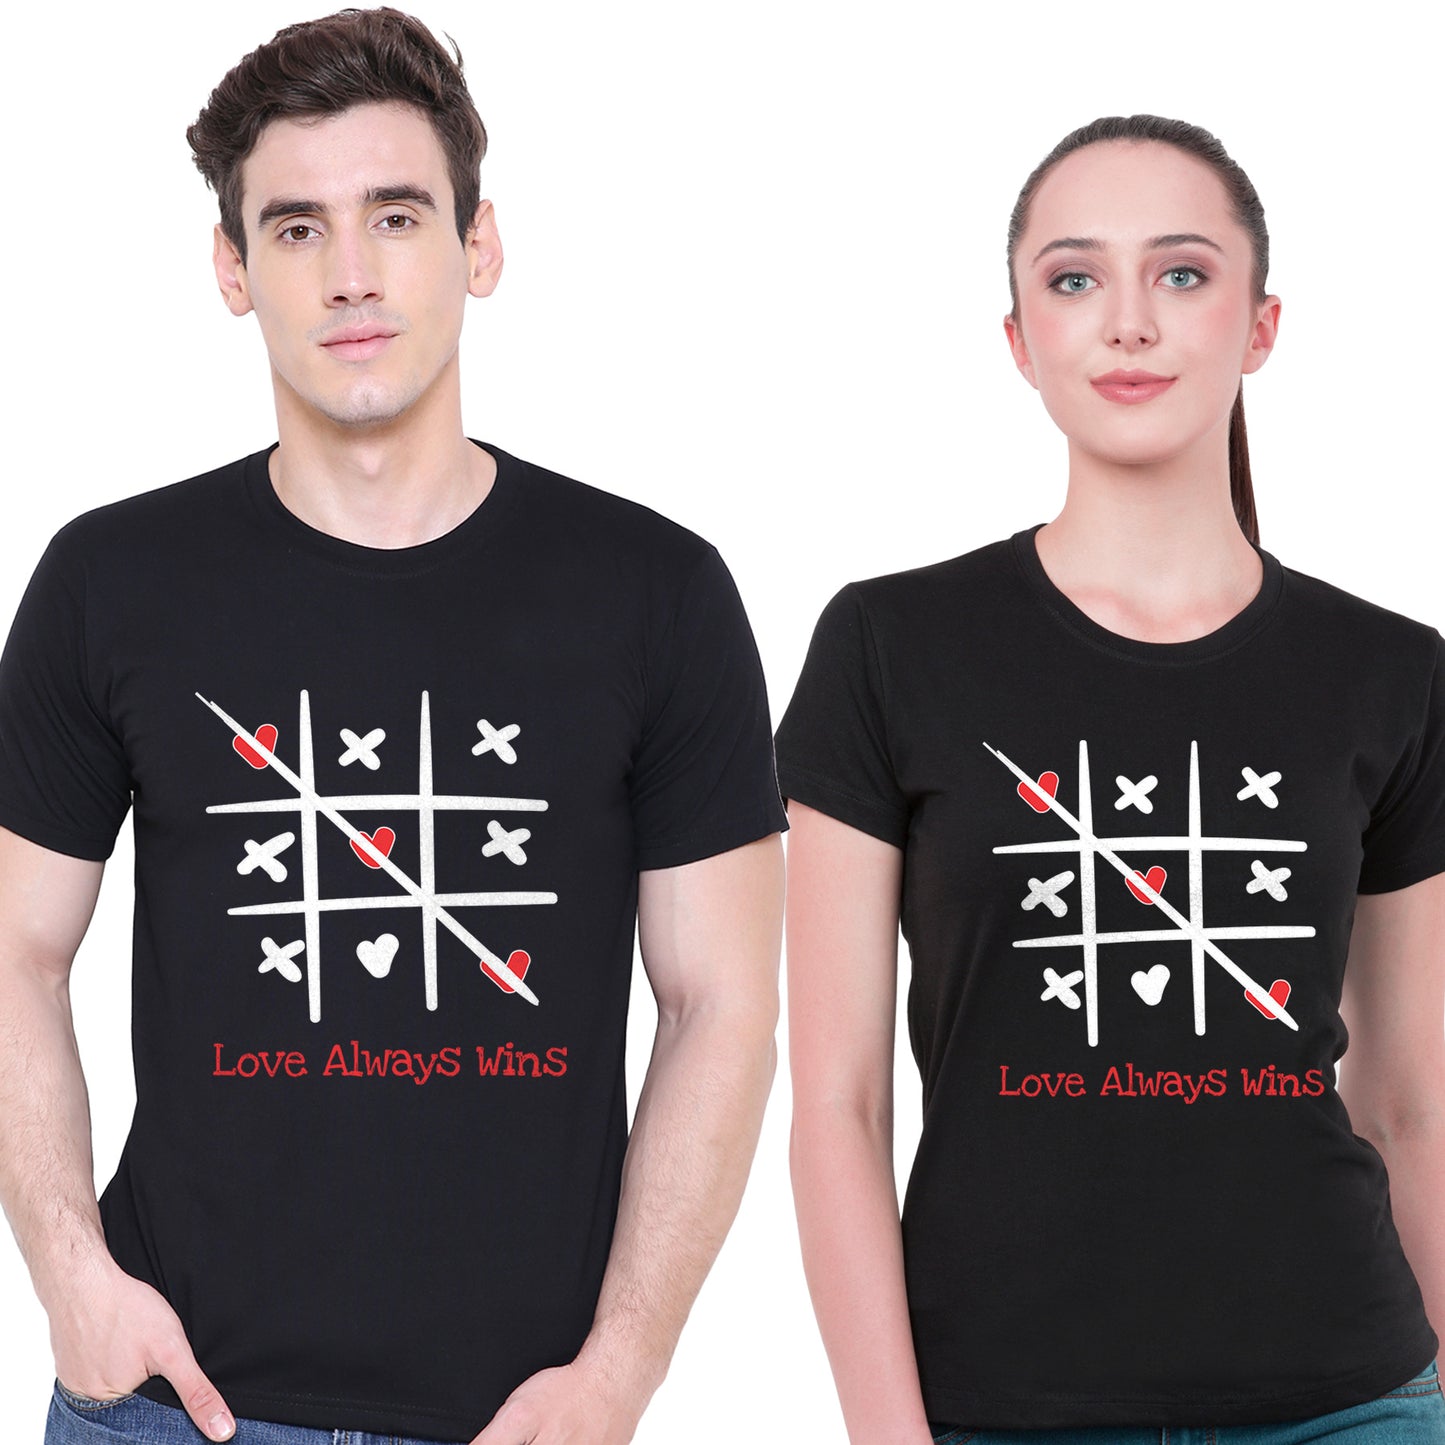 Love Always win matching Couple T shirts- Black